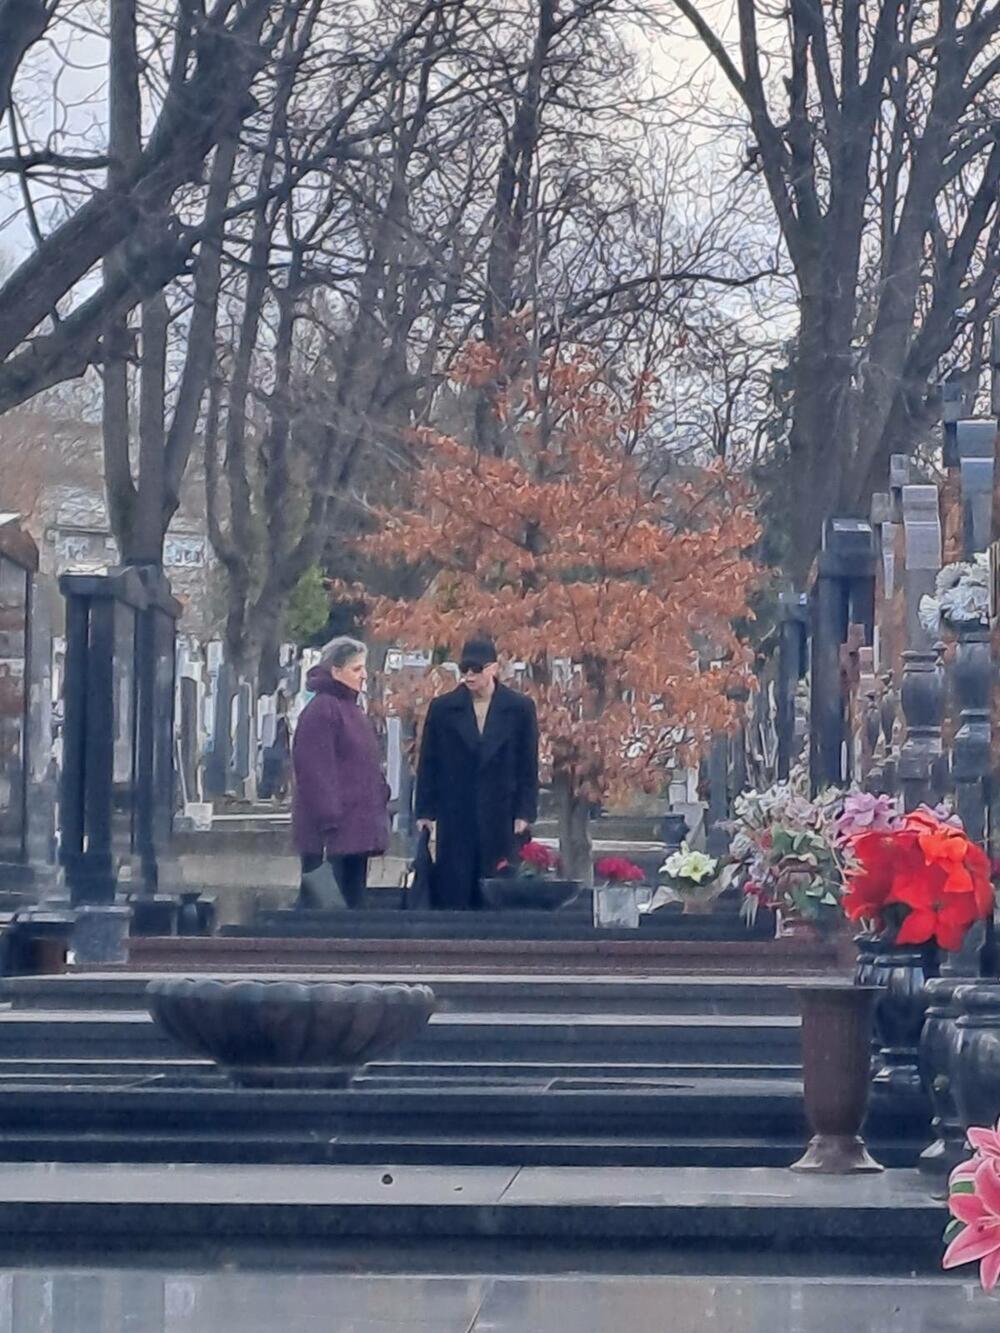 <p>Na Novom groblju, povodom 13 godina od smrti, održan je pomen pevačici Kseniji Pajčin. </p>

<p> </p>

<p> </p>